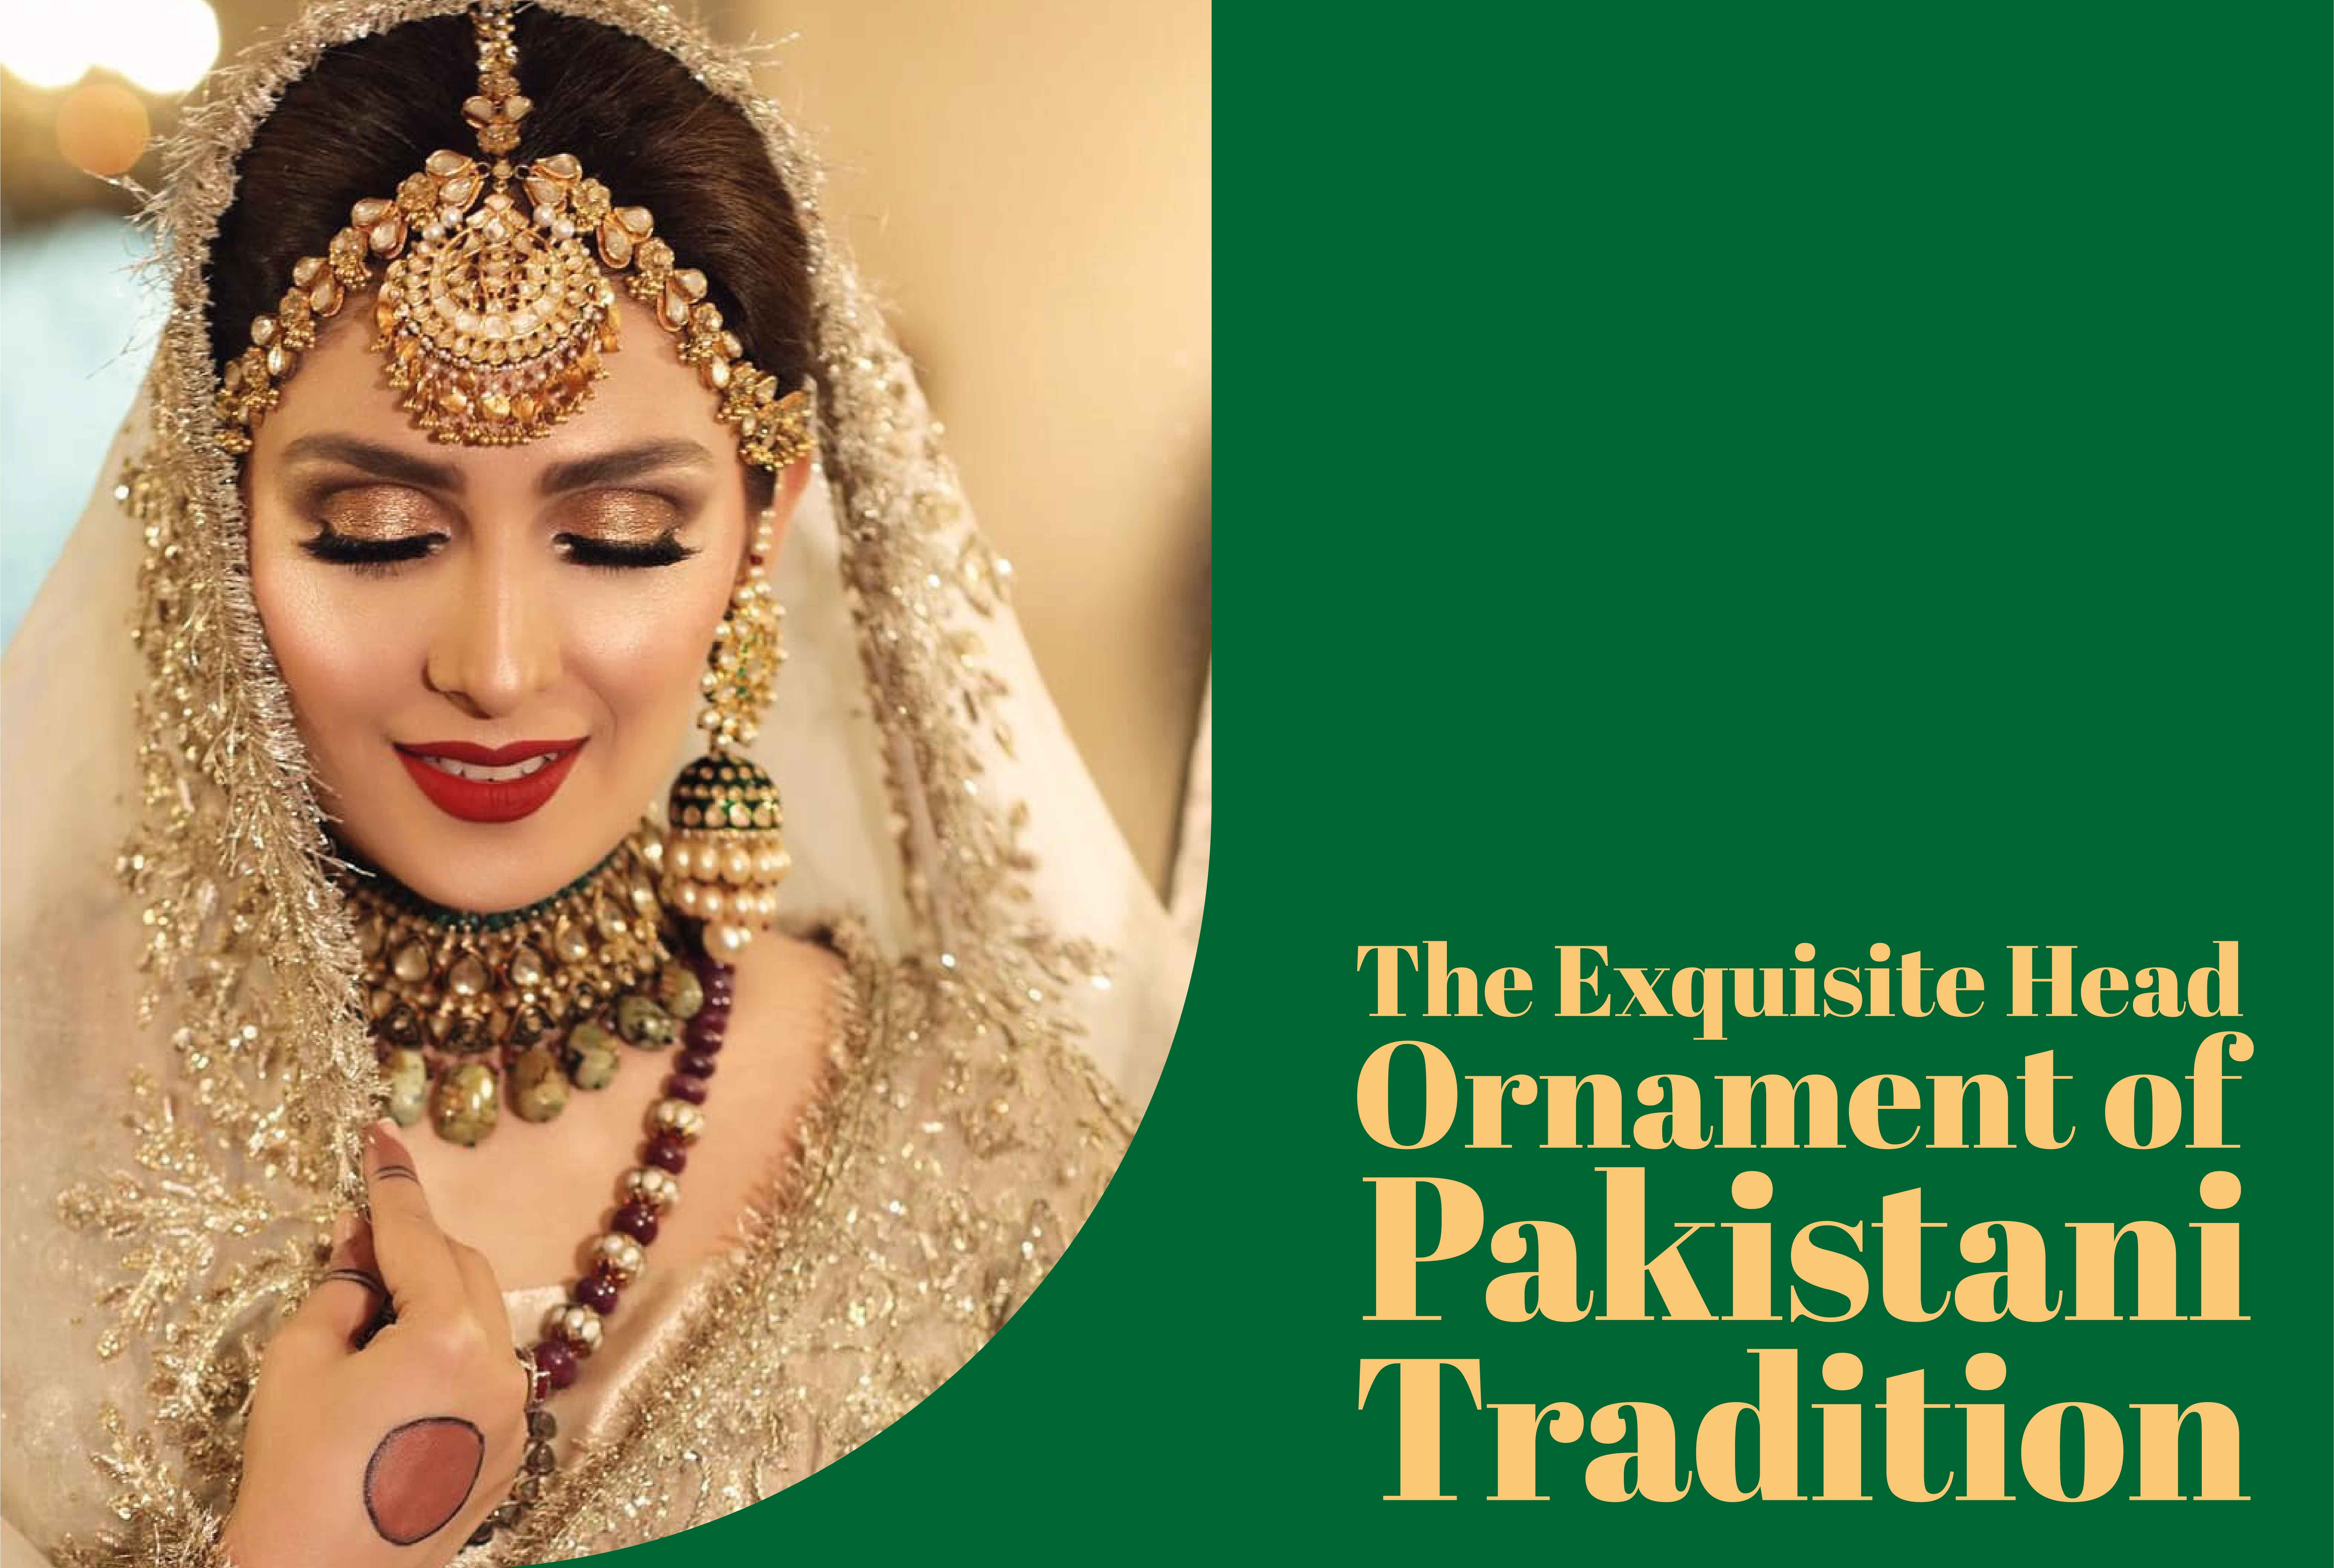 Pakistani Tradition